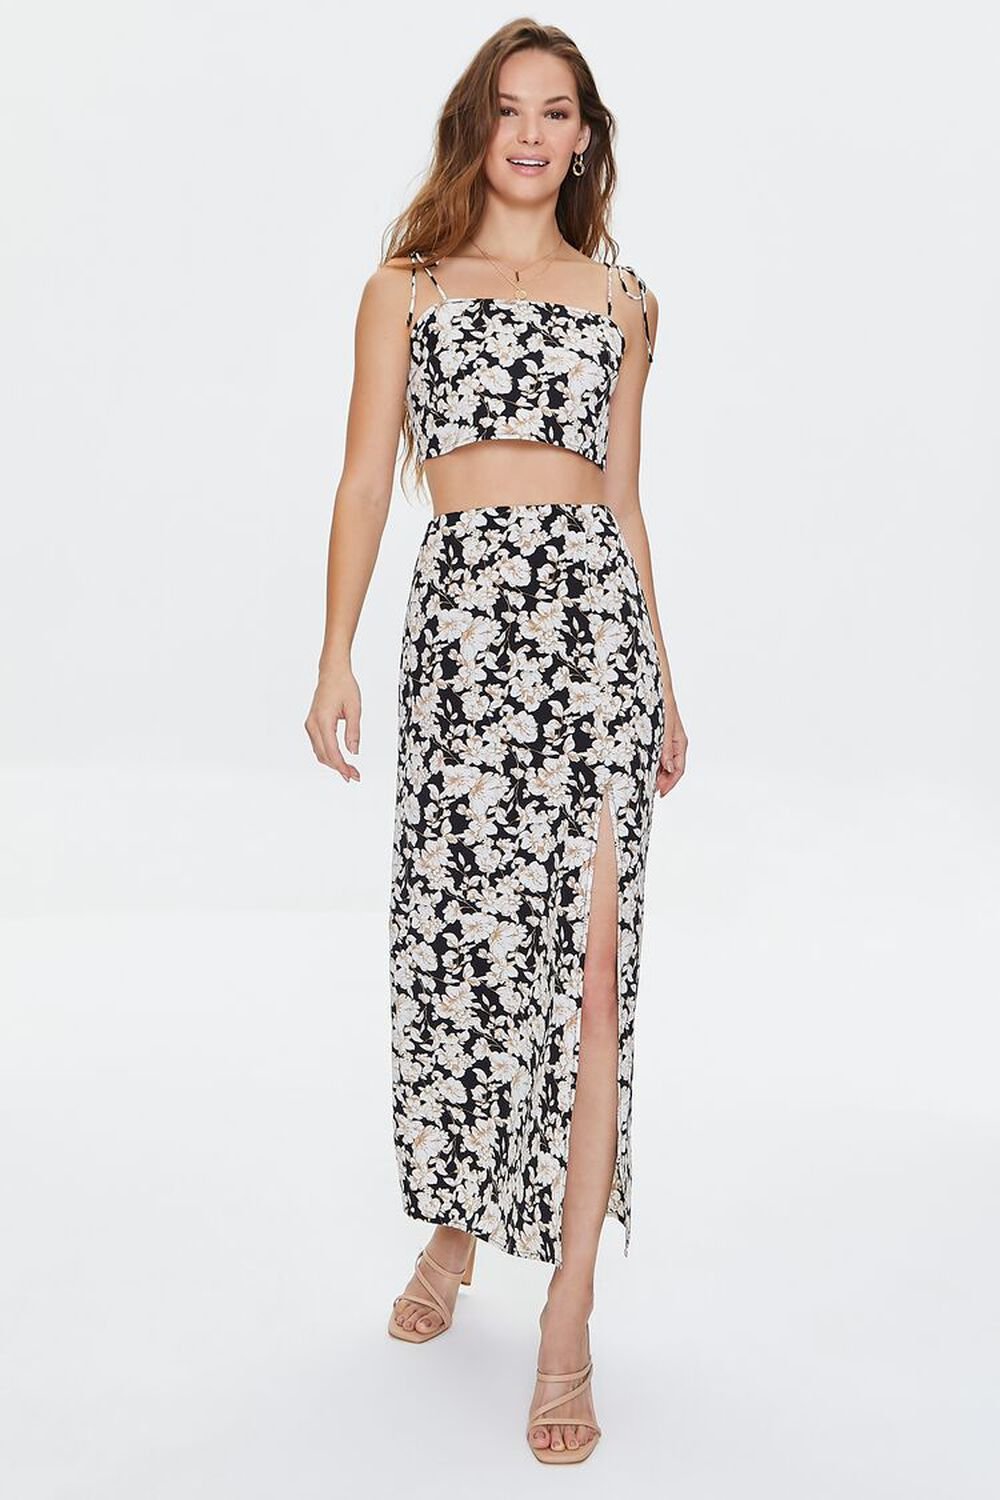 BLACK/MULTI Floral Print Cropped Cami & Skirt Set, image 1